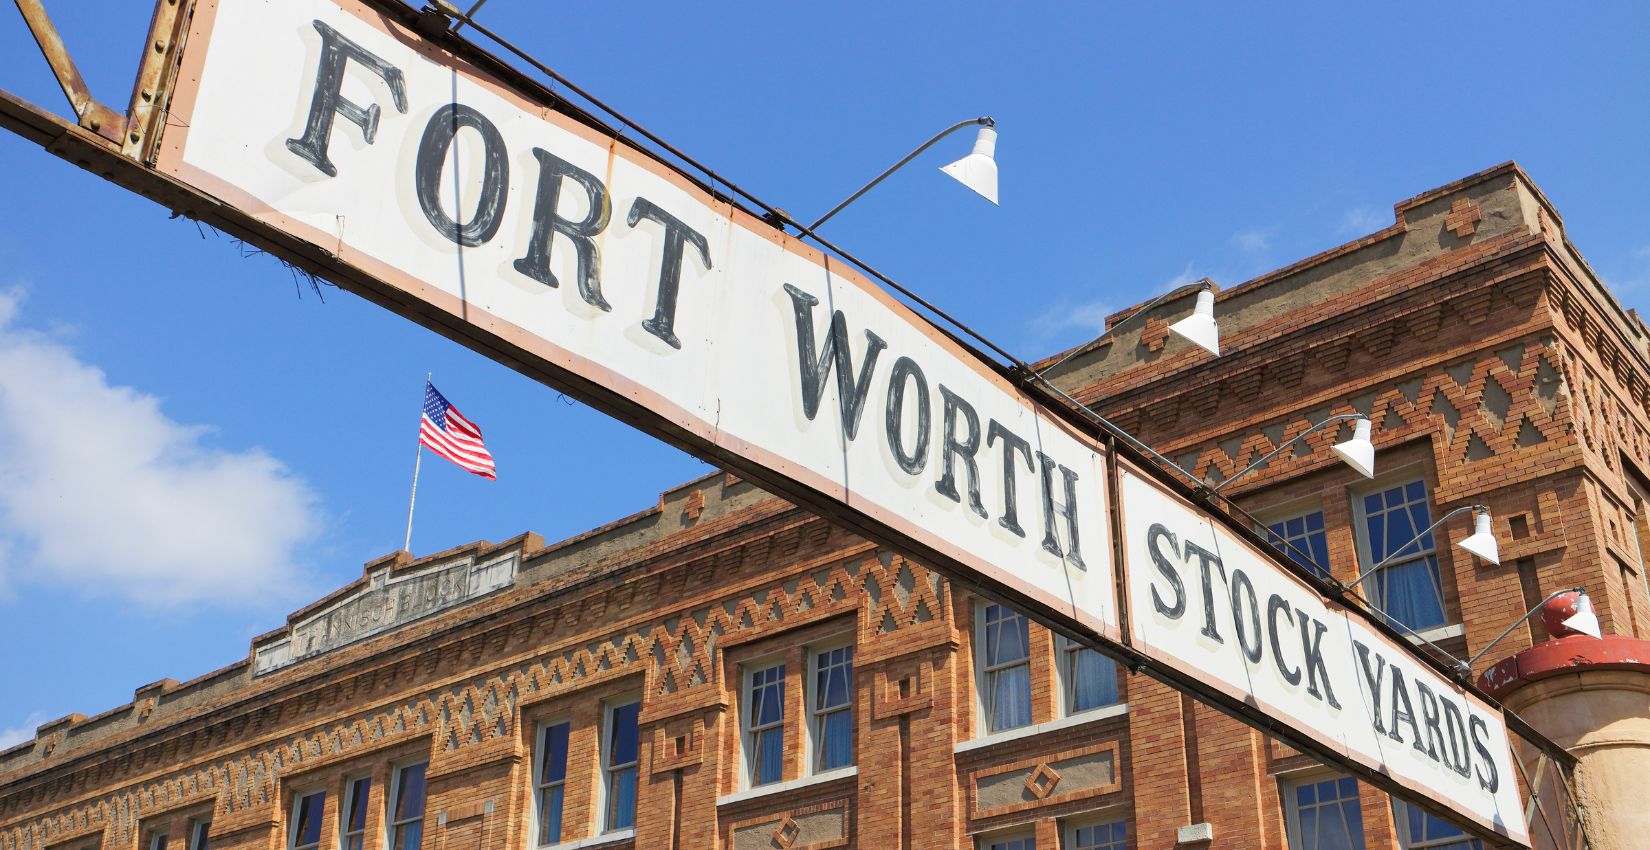 Fort Worth Stock Yard Signage